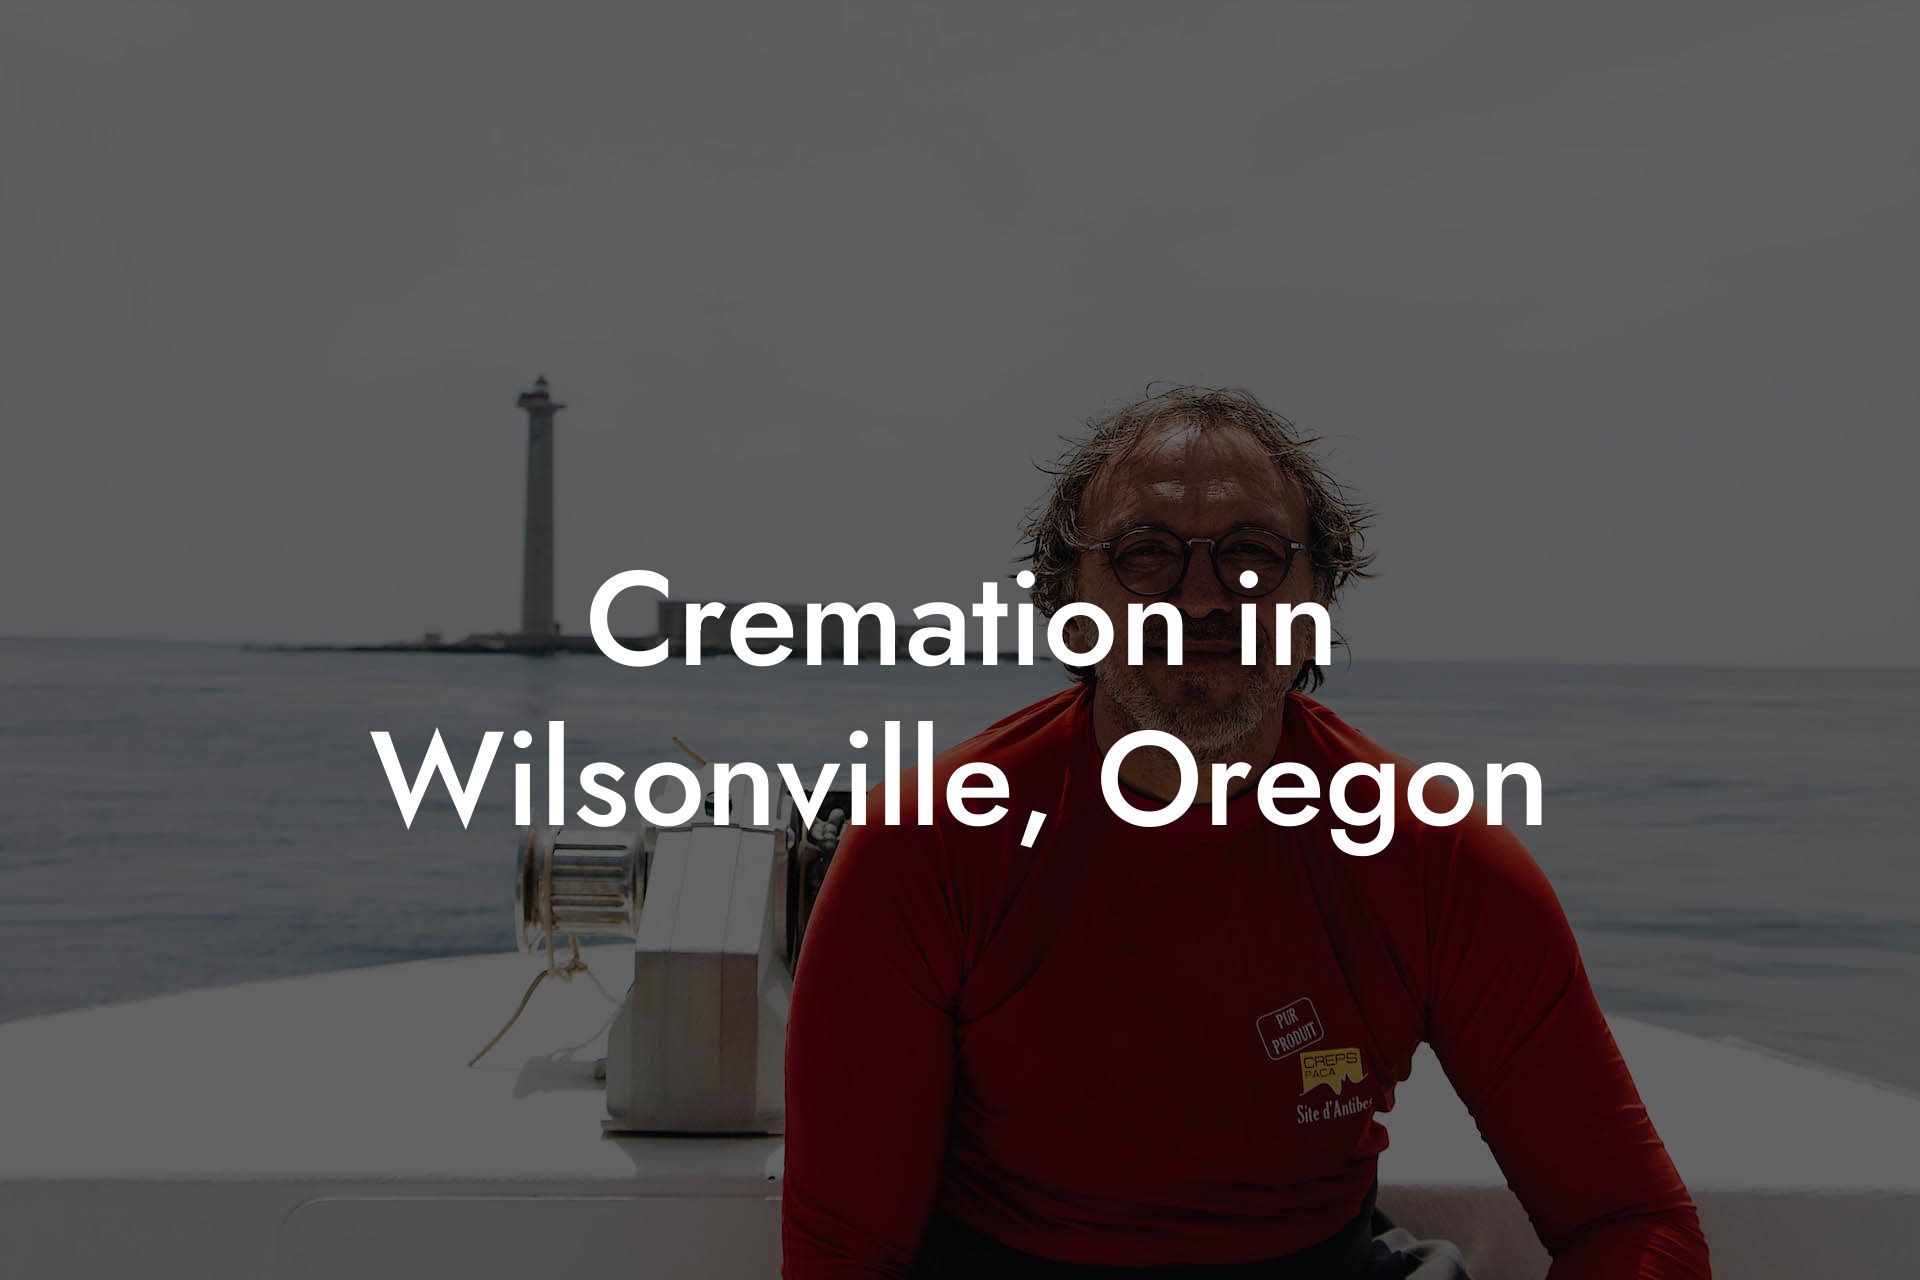 Cremation in Wilsonville, Oregon